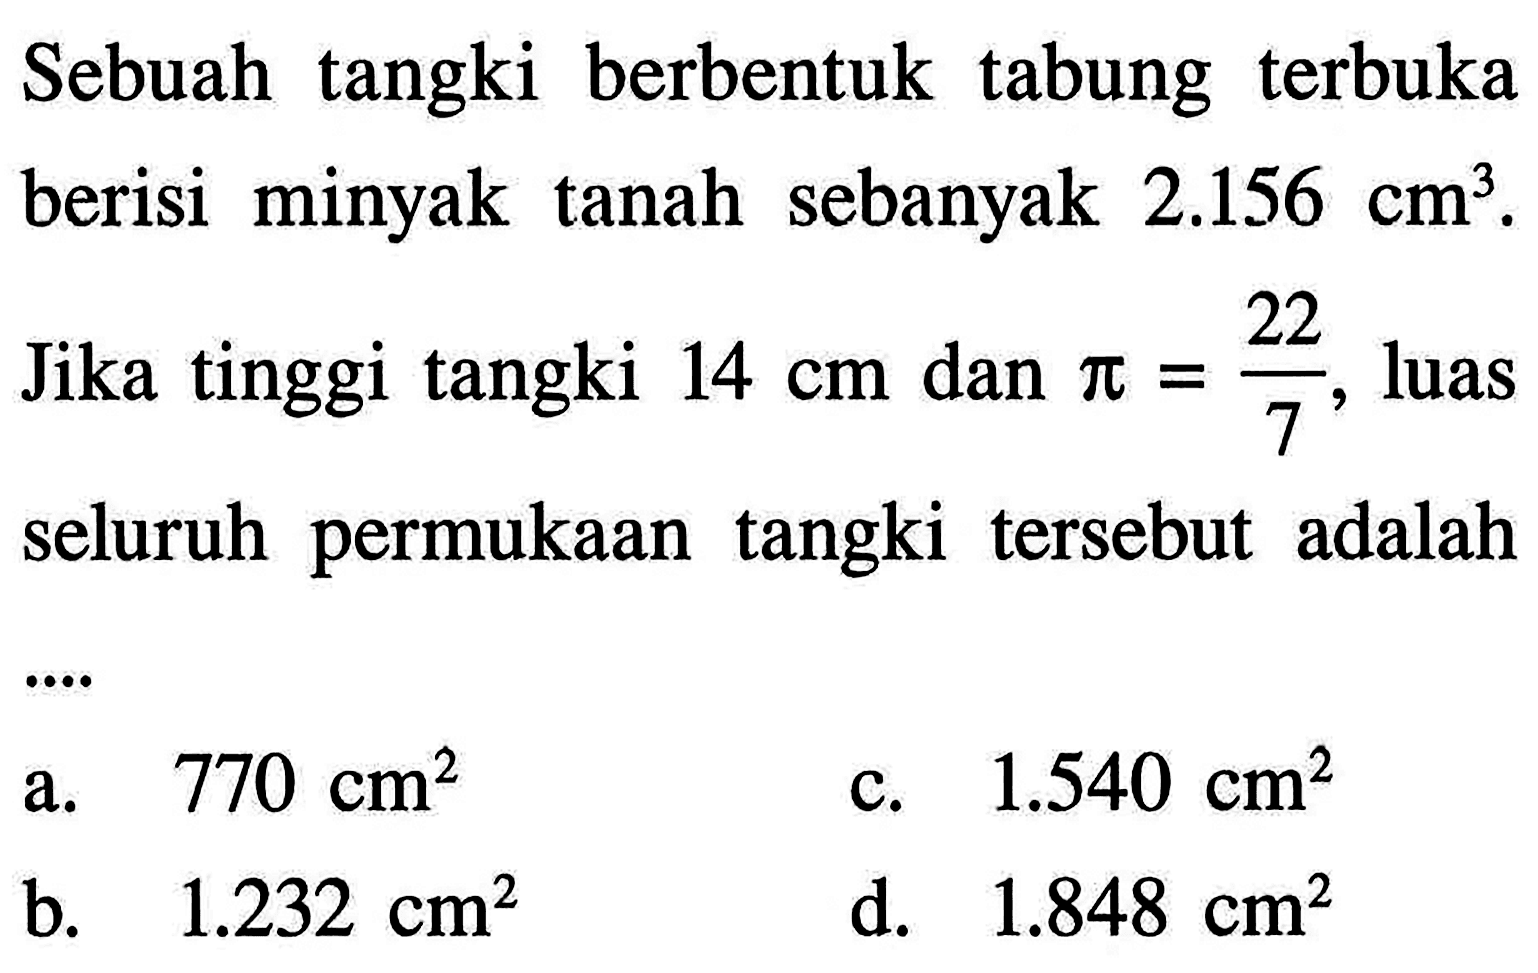 Sebuah tangki berbentuk tabung terbuka berisi minyak tanah sebanyak 2.156 cm^3. Jika tinggi tangki 14 cm dan pi=(22/7), luas seluruh permukaan tangki tersebut adalah